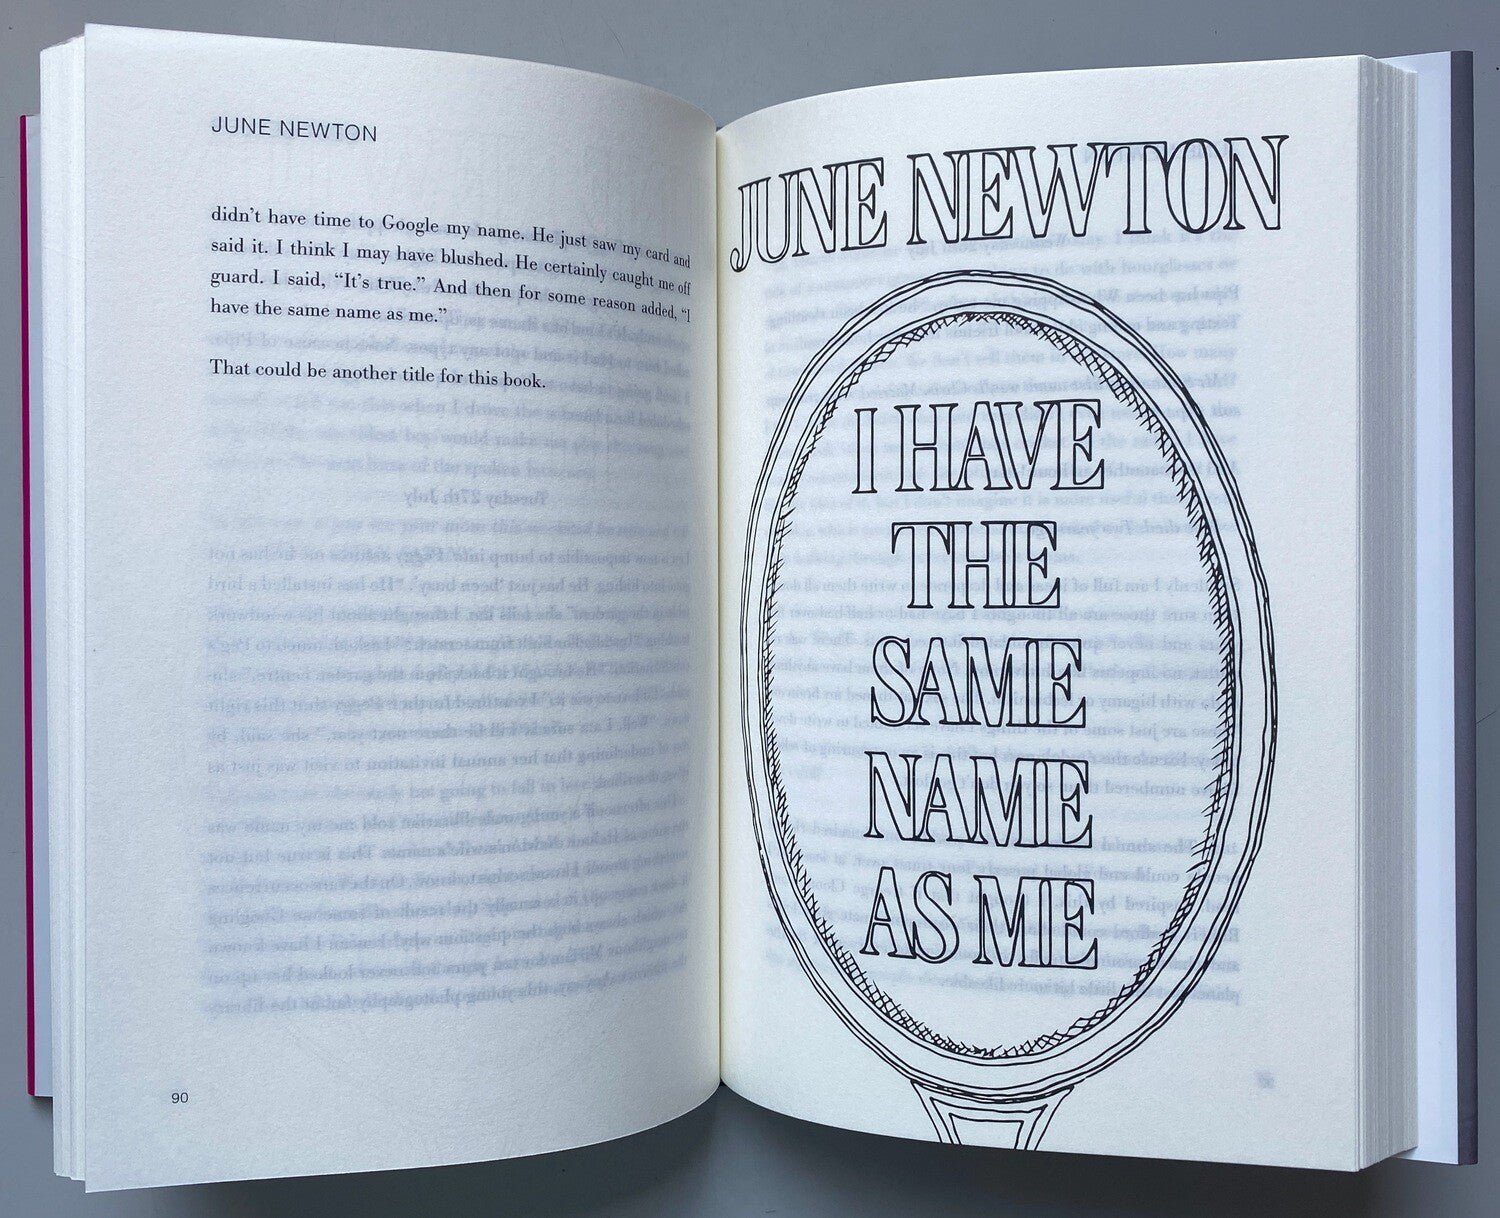 BEST SELLER June Newton by David Owen (the D of IDEA)